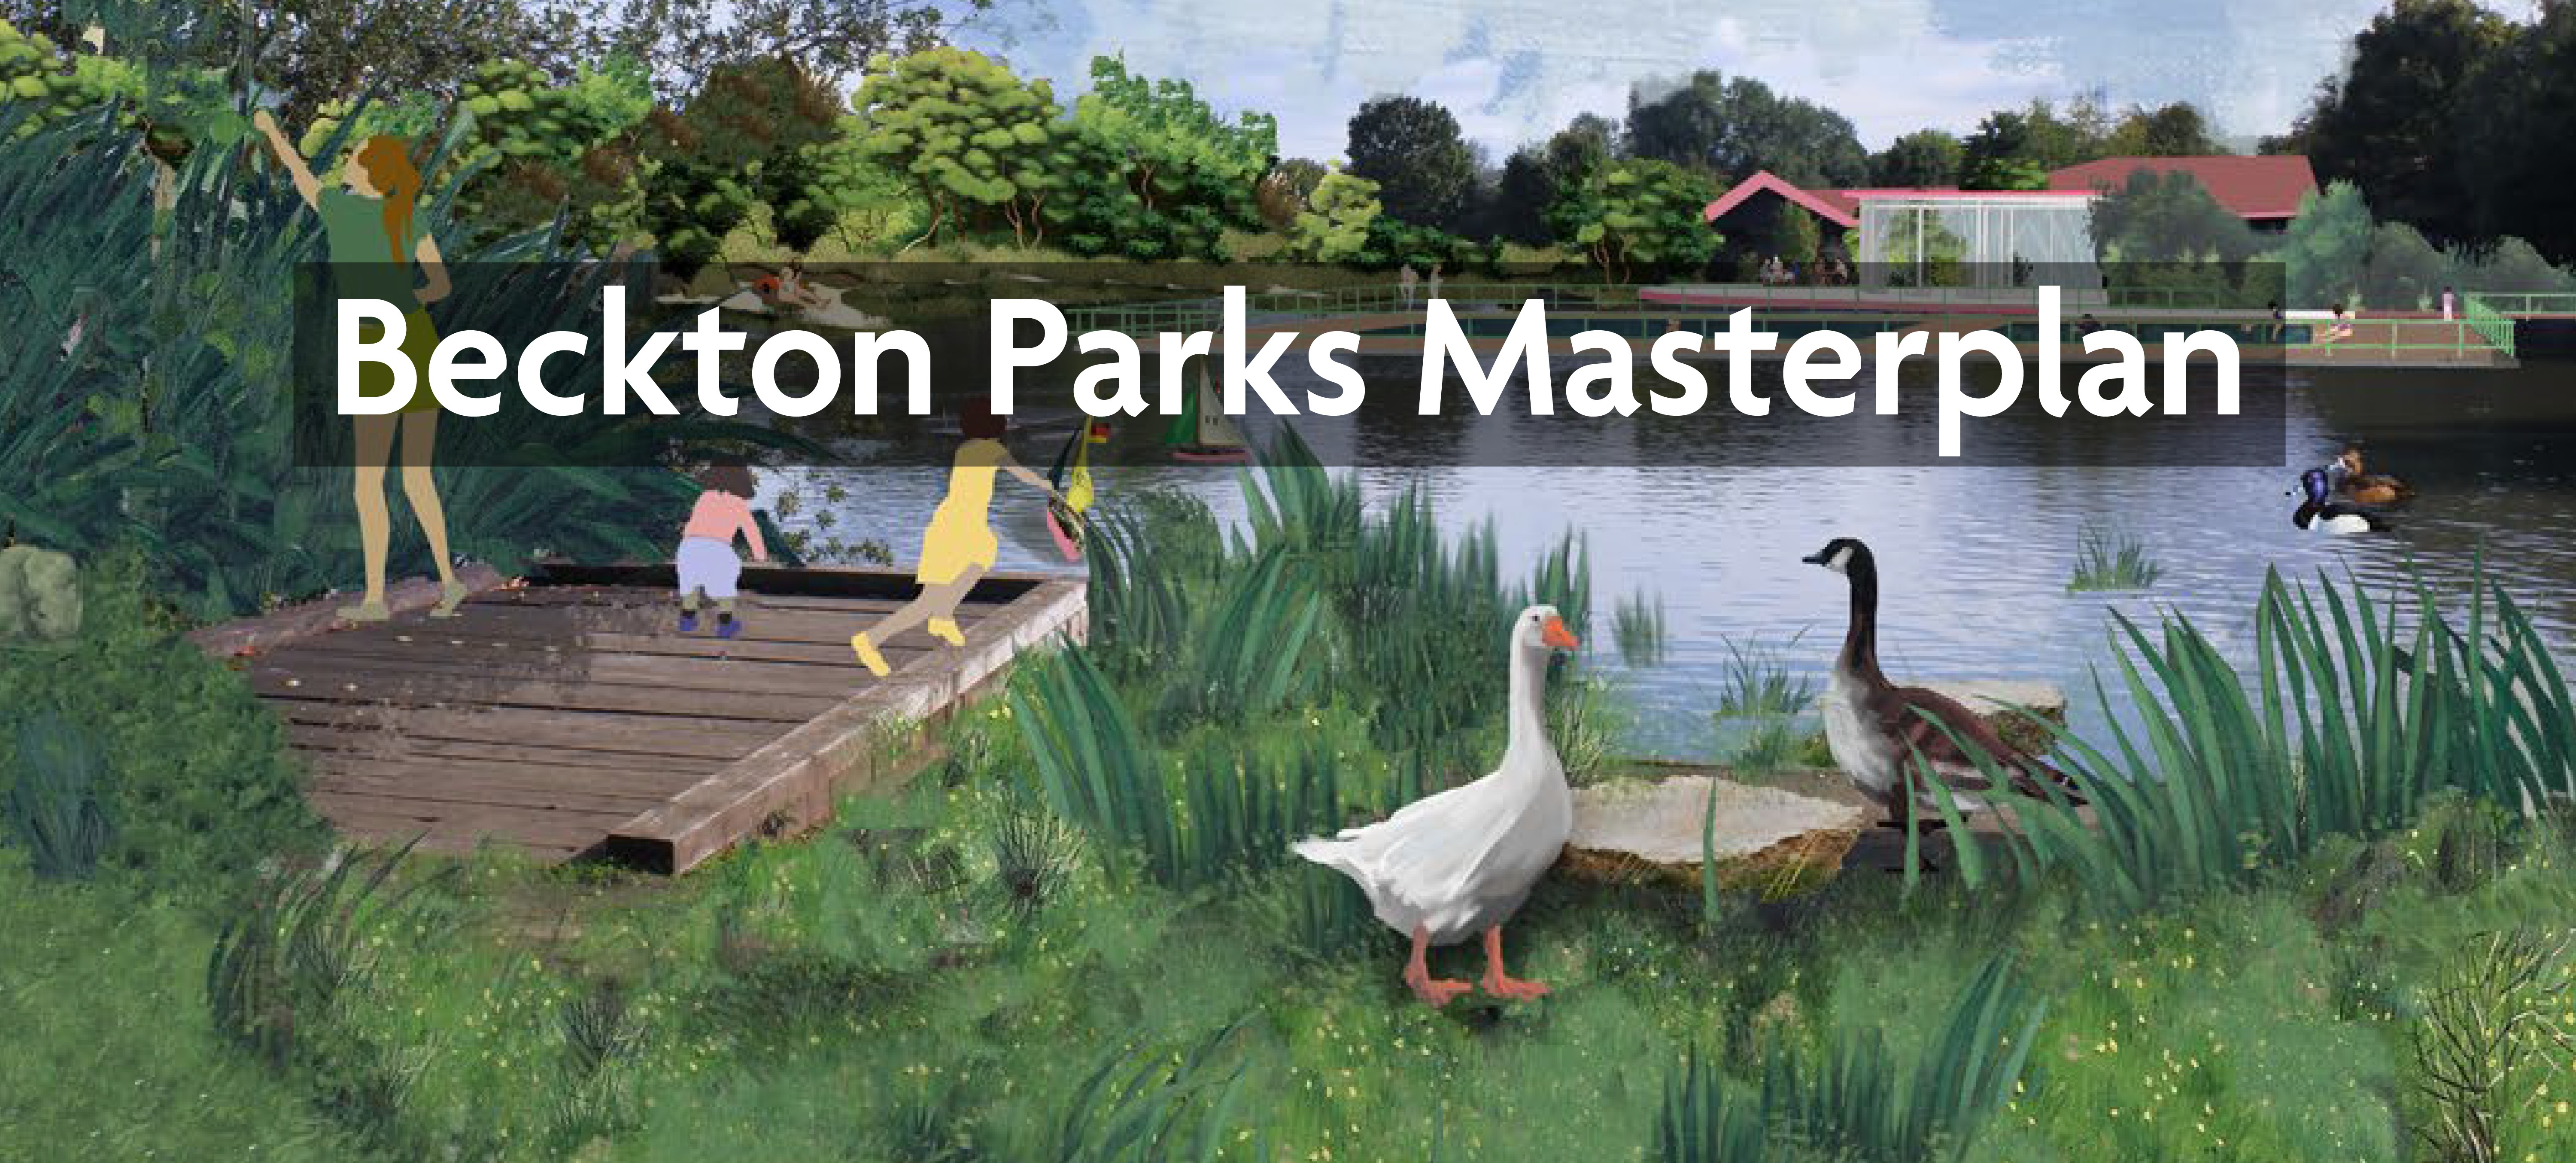 Beckton masterplan web banner with text that reads Beckton Parks Masterplan